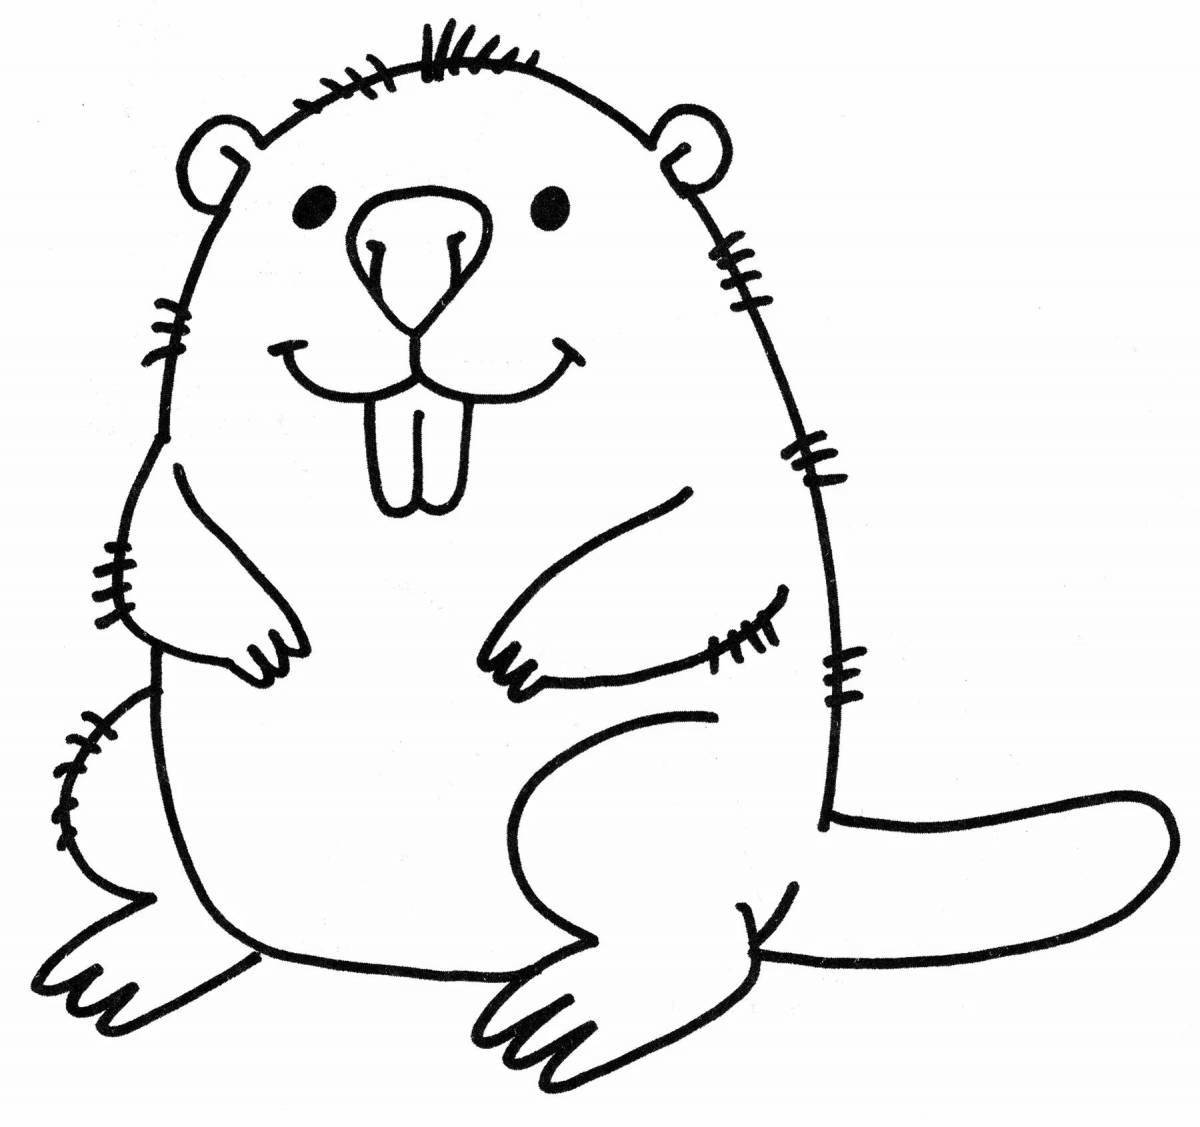 Joyful beaver coloring for kids